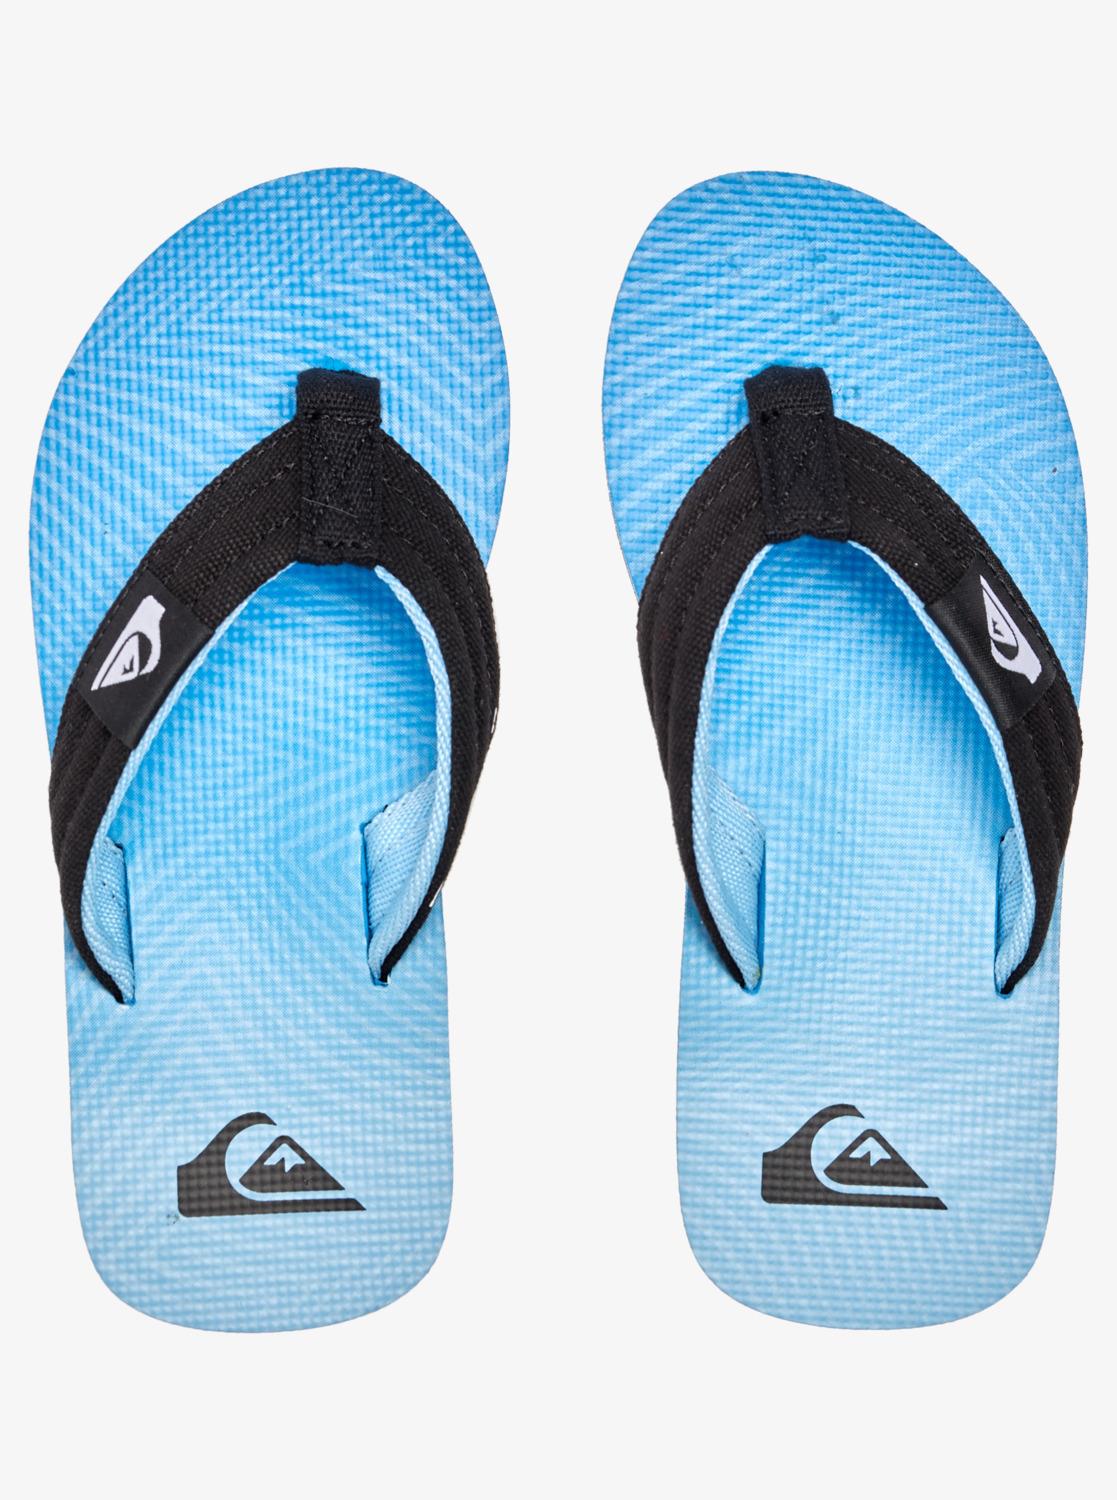 Quiksilver Molokai Layback Blue Toe Post Flip Flops Sandals